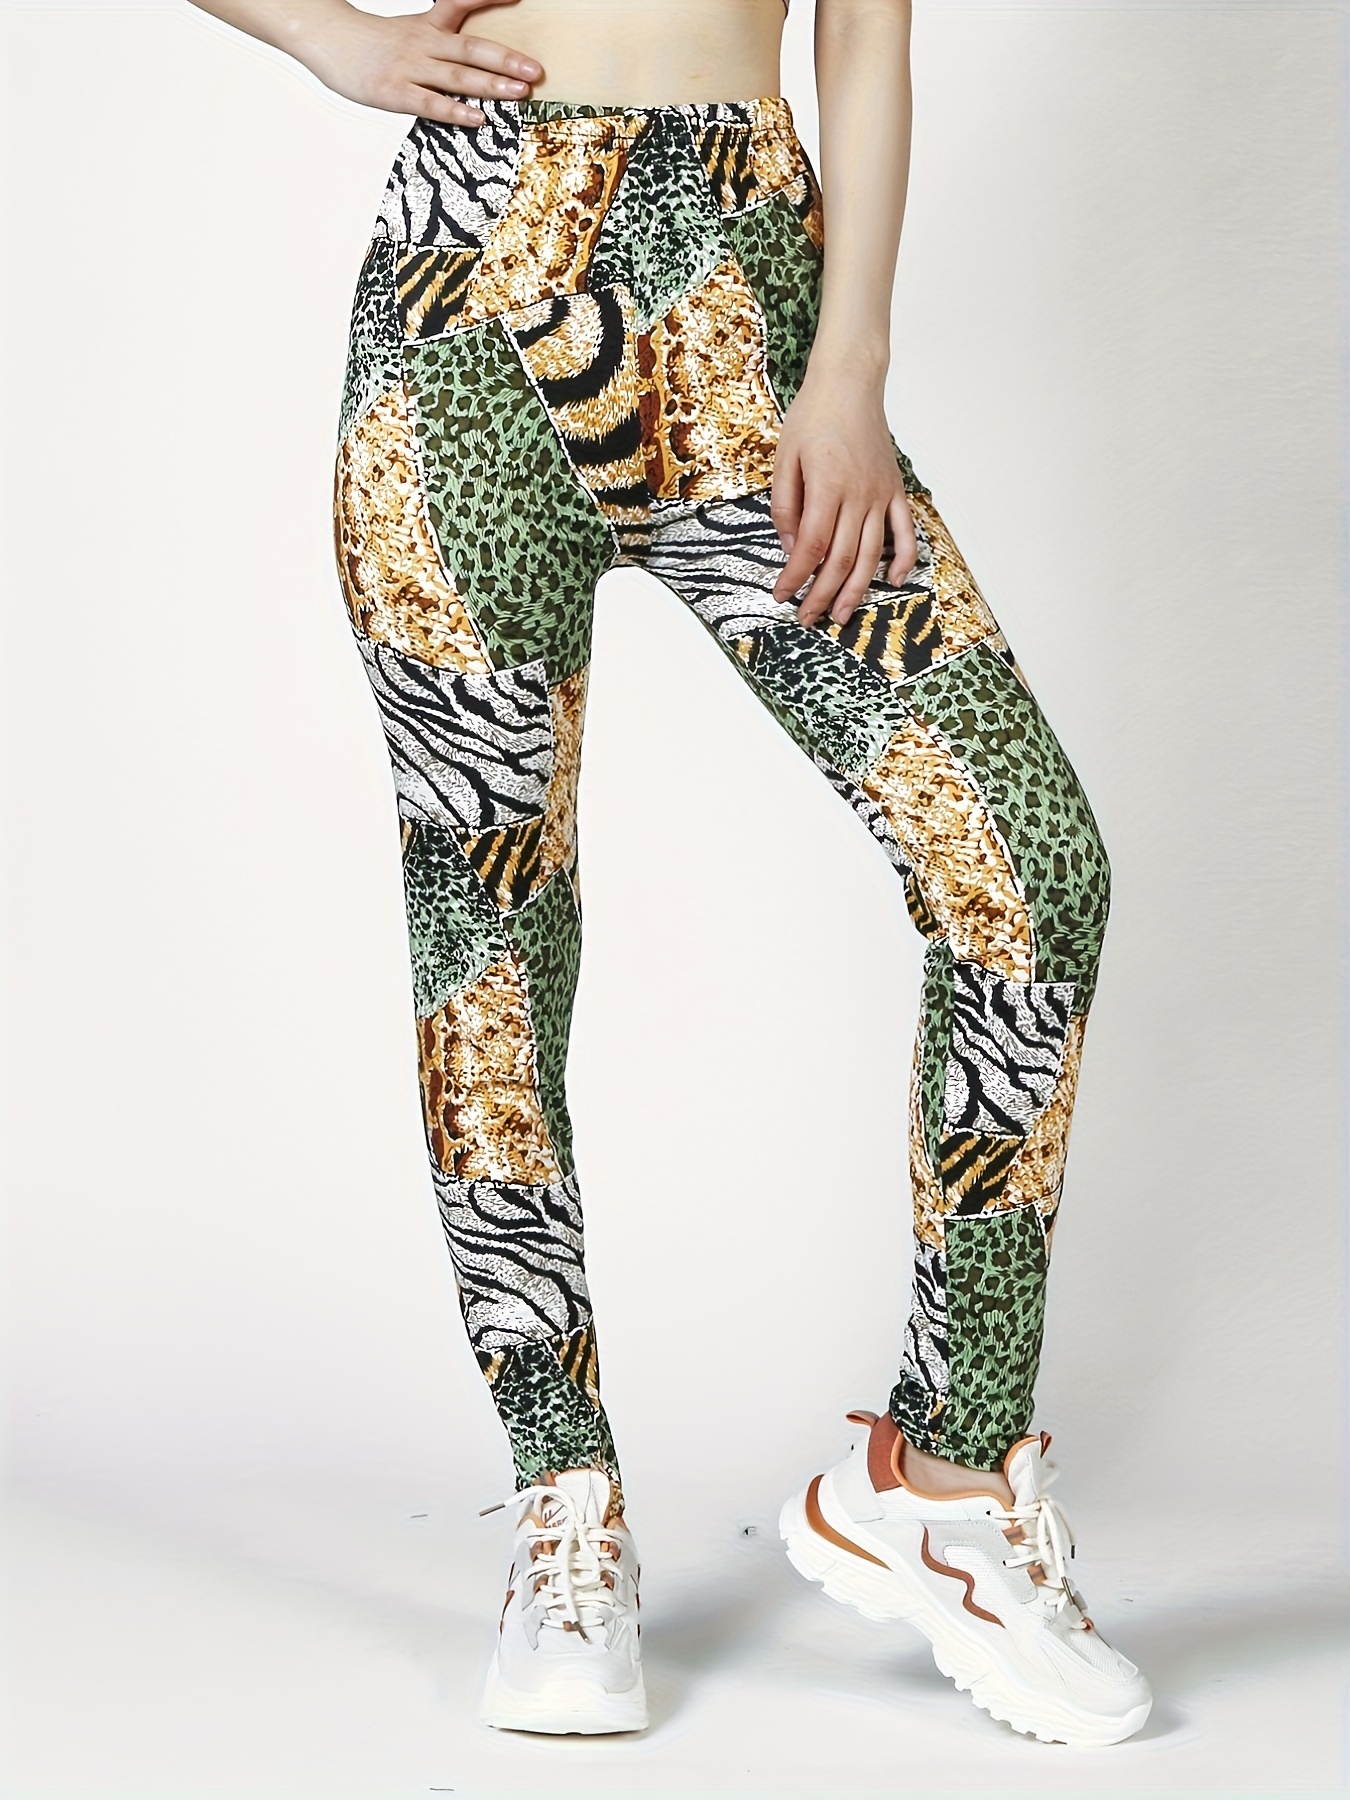 80s style Metallic Leopard Print Leggings, Vintage Inspired